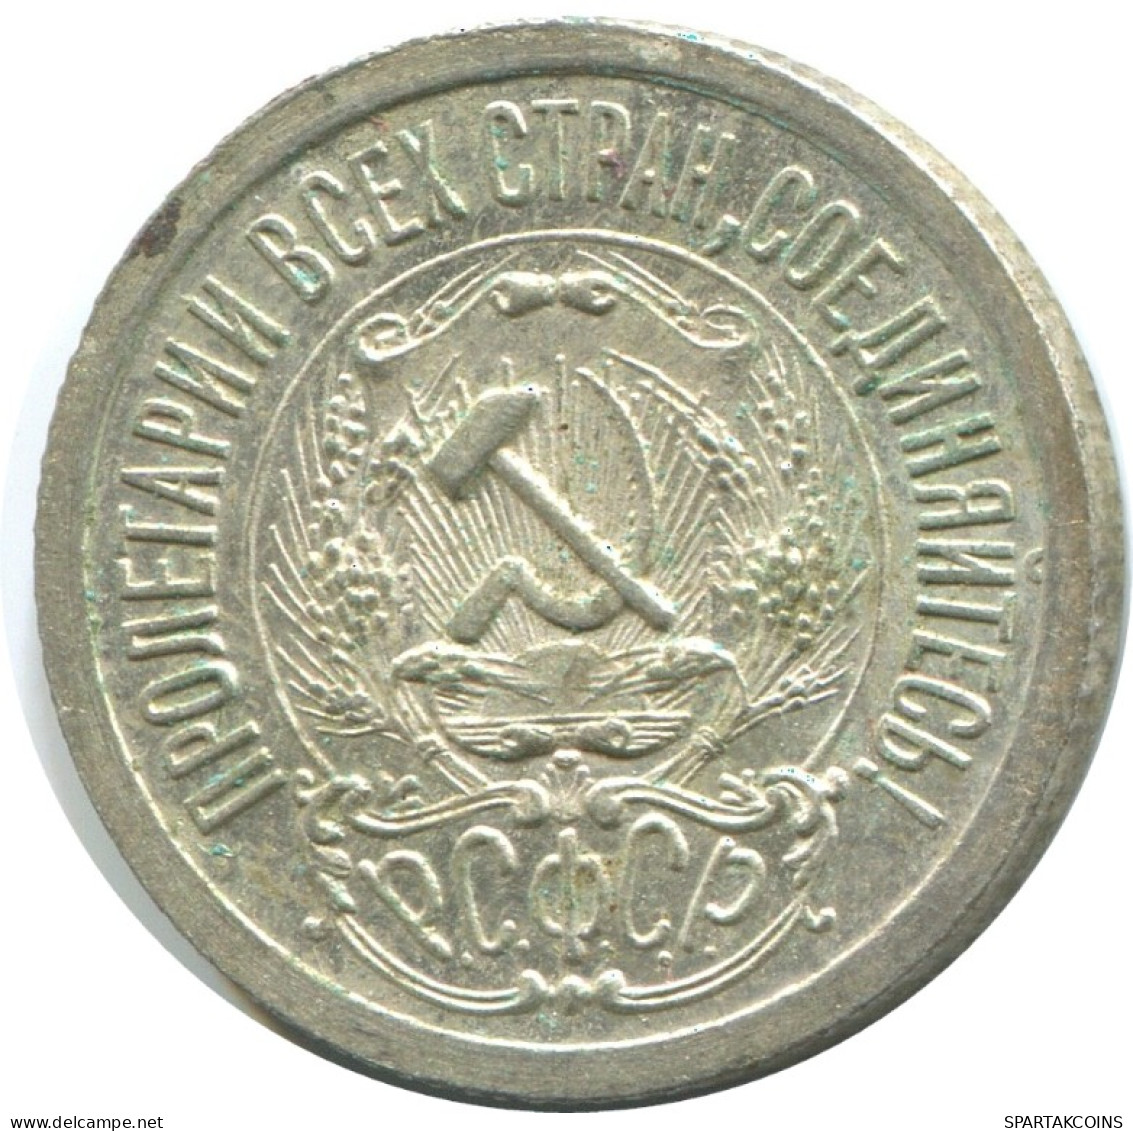 15 KOPEKS 1923 RUSIA RUSSIA RSFSR PLATA Moneda HIGH GRADE #AF025.4.E.A - Russia